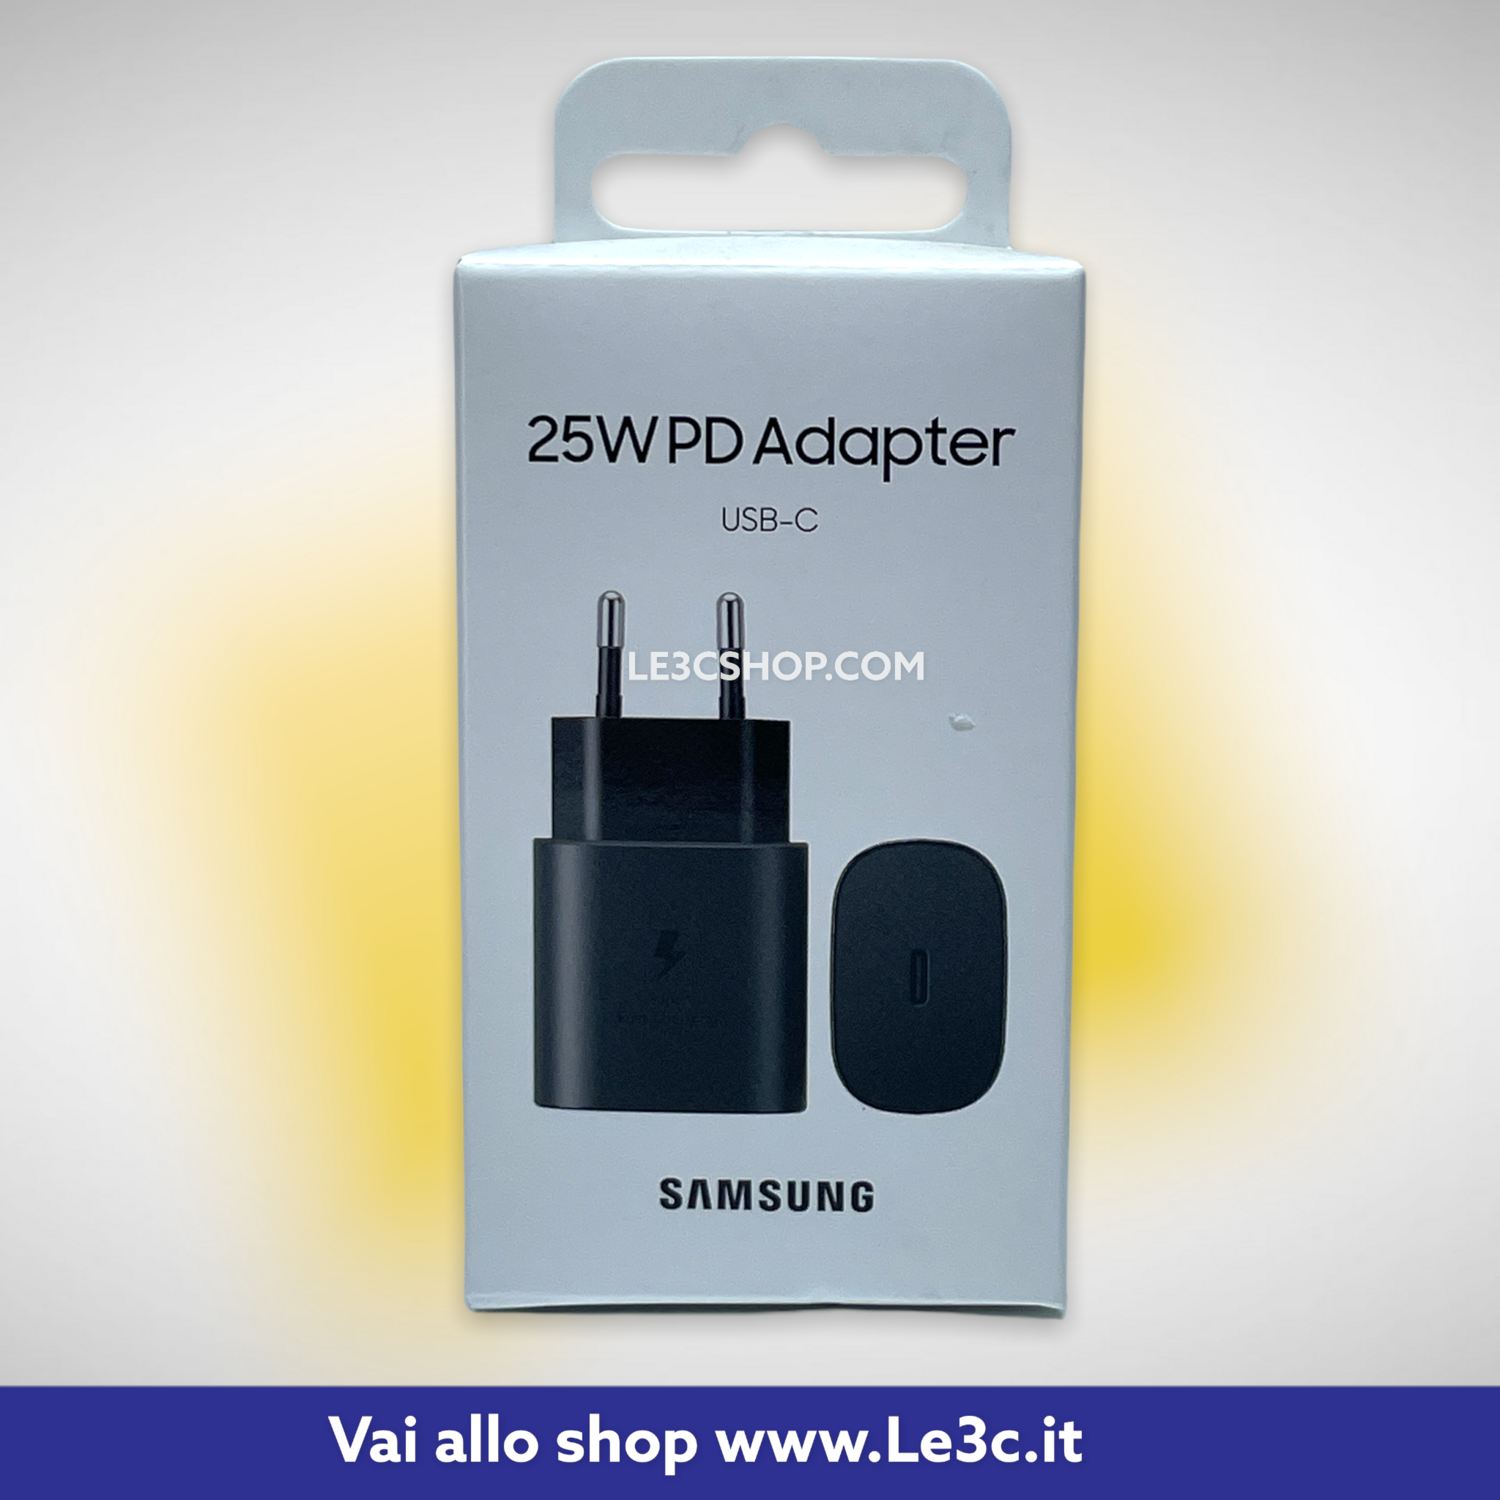 travel adapter 25wPD Adapter Samsung usb-C